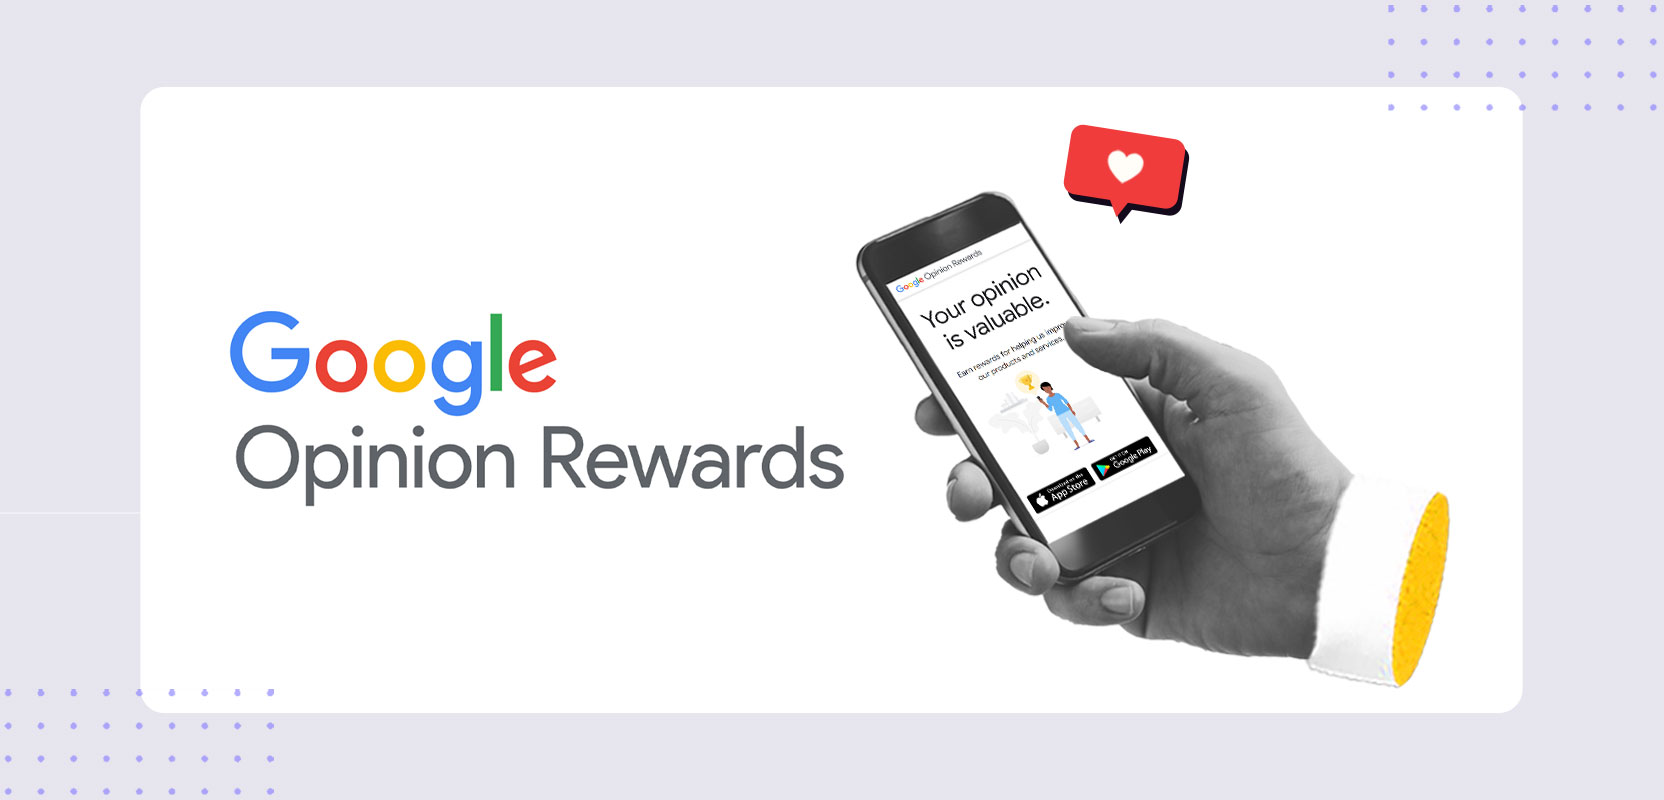 Smartphone next to Google Opinion Rewards logo